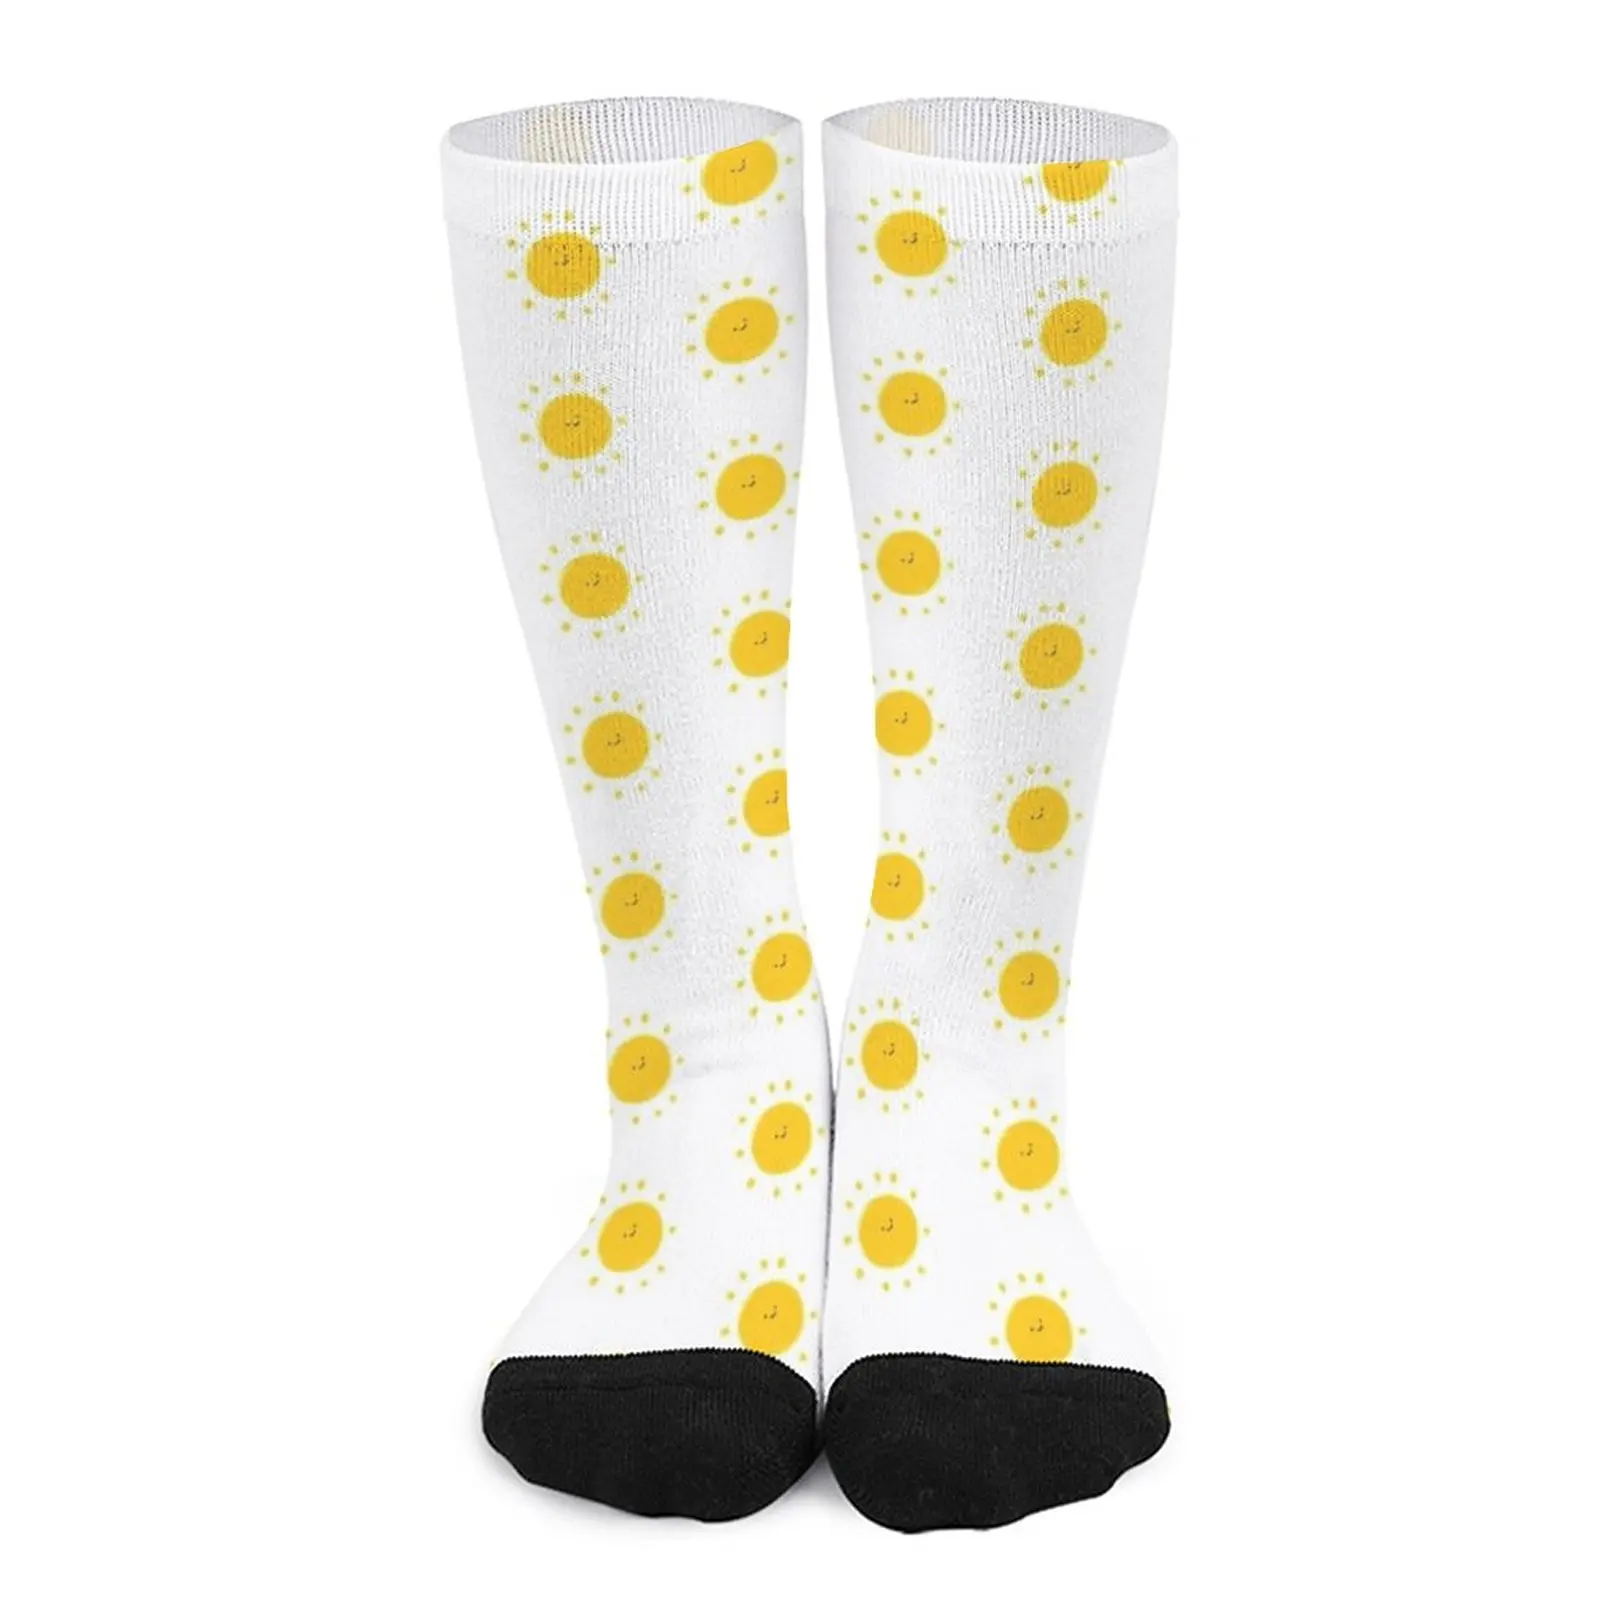 Mr. Sunshine Socks Woman socks socks aesthetic compression socks men sunshine anderson your woman 1 cd